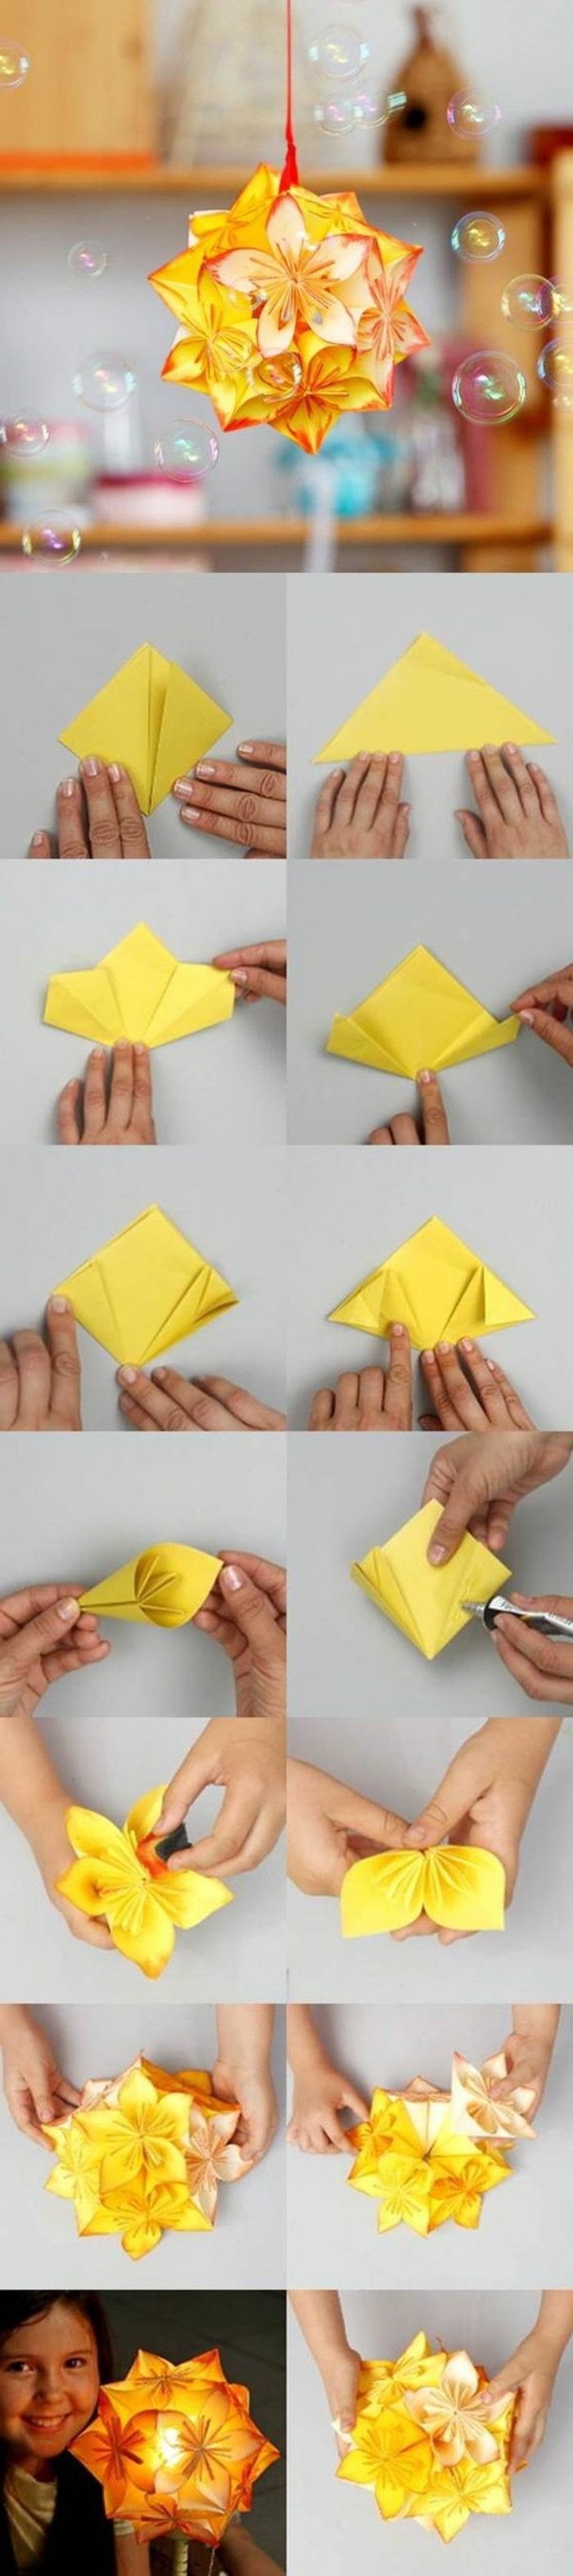 origami rimpel origami vouwen instructie-Origami-vouwtraditie foldingmanuals-paper